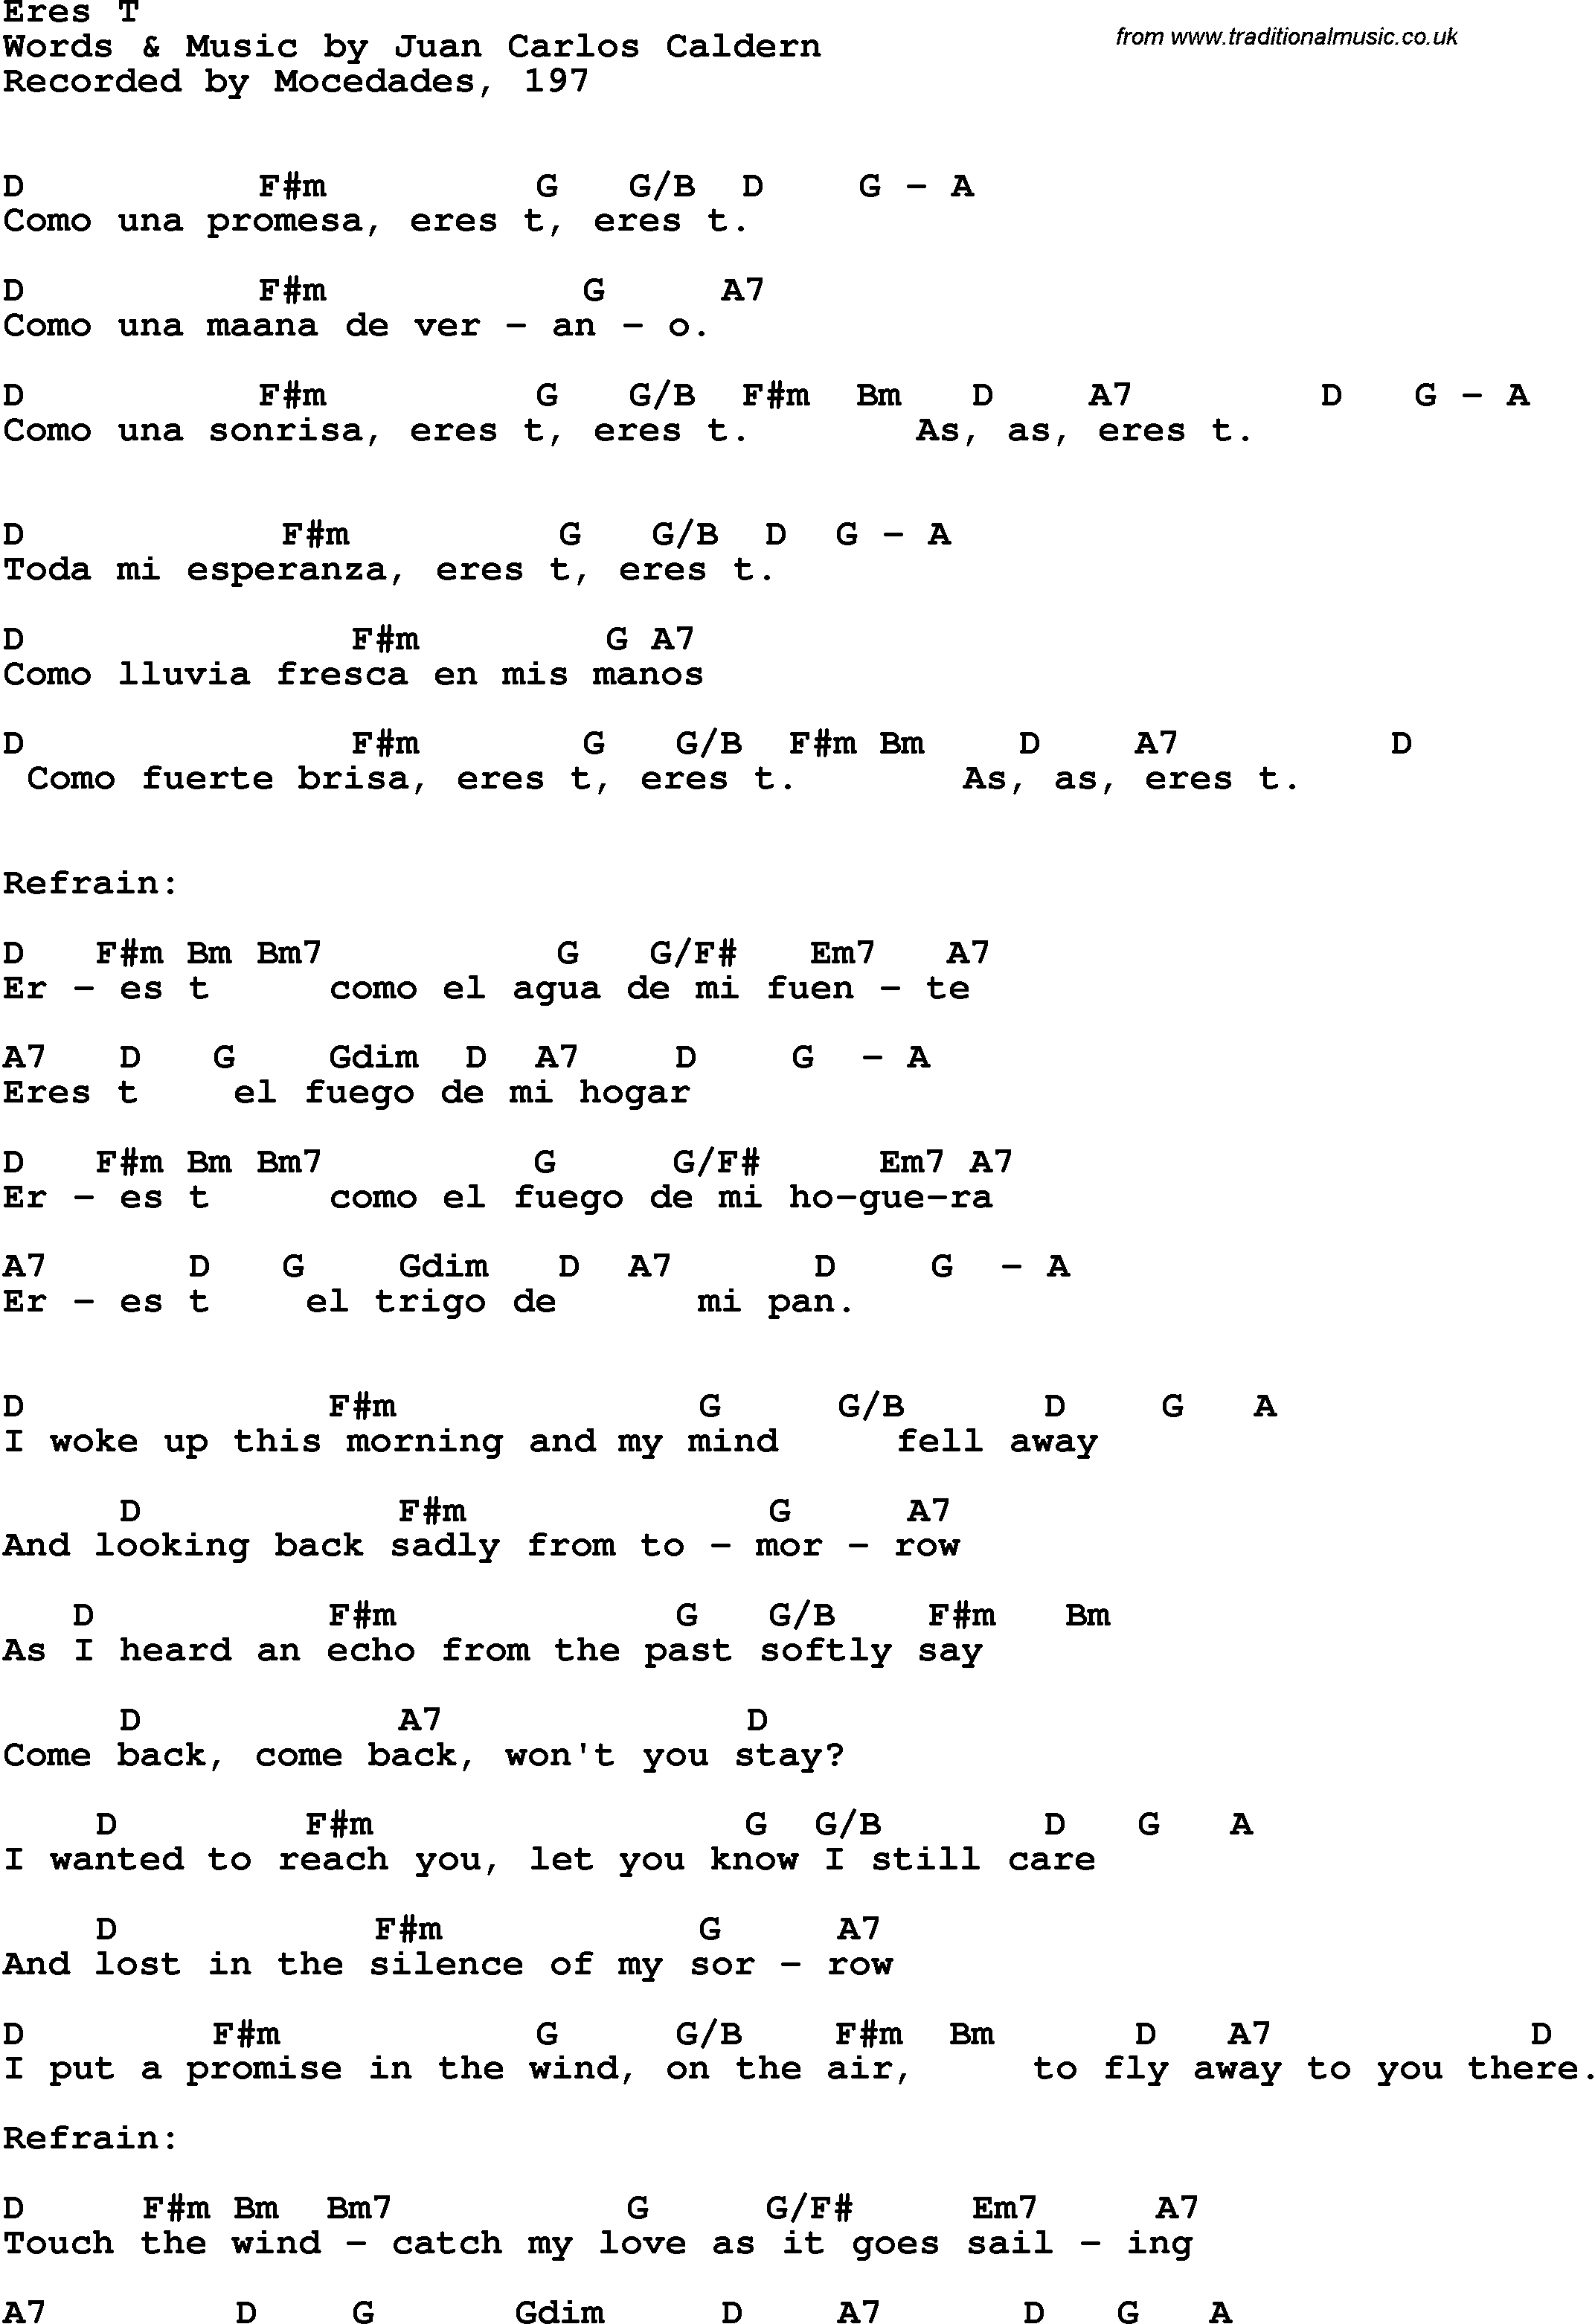 Song Lyrics with guitar chords for Eres Tu - Mocedades, 1973